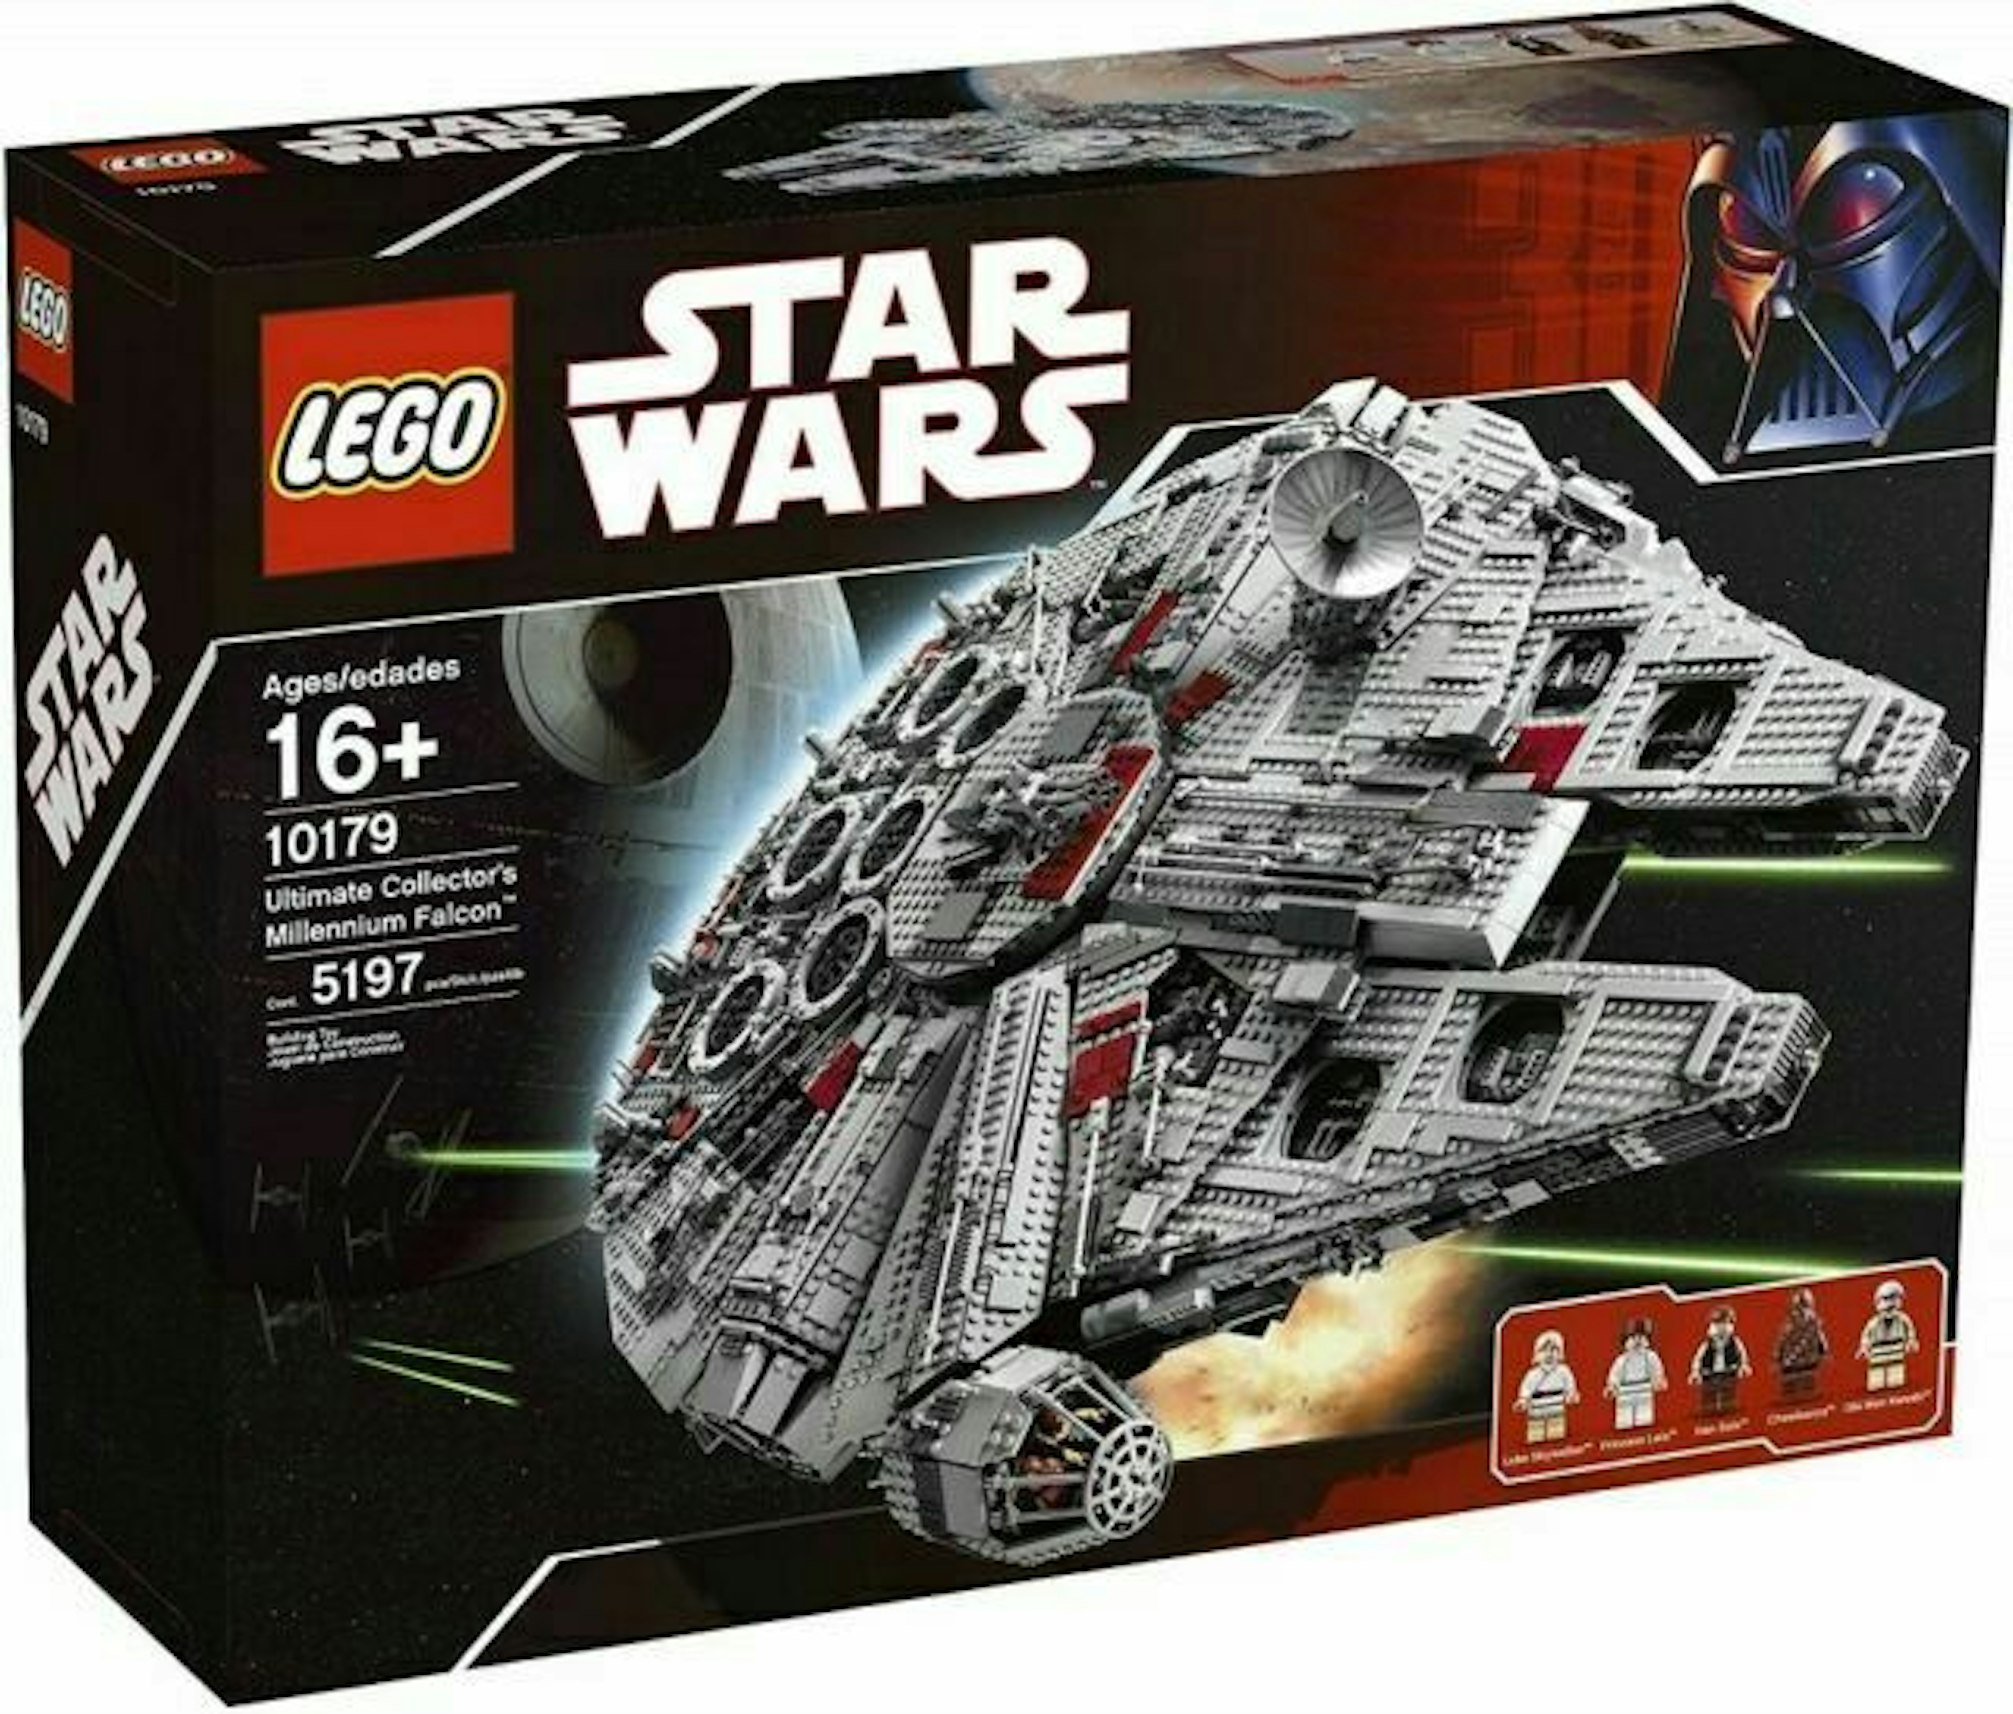 LEGO Star Wars Ultimate Collector's Millennium Set 10179 US